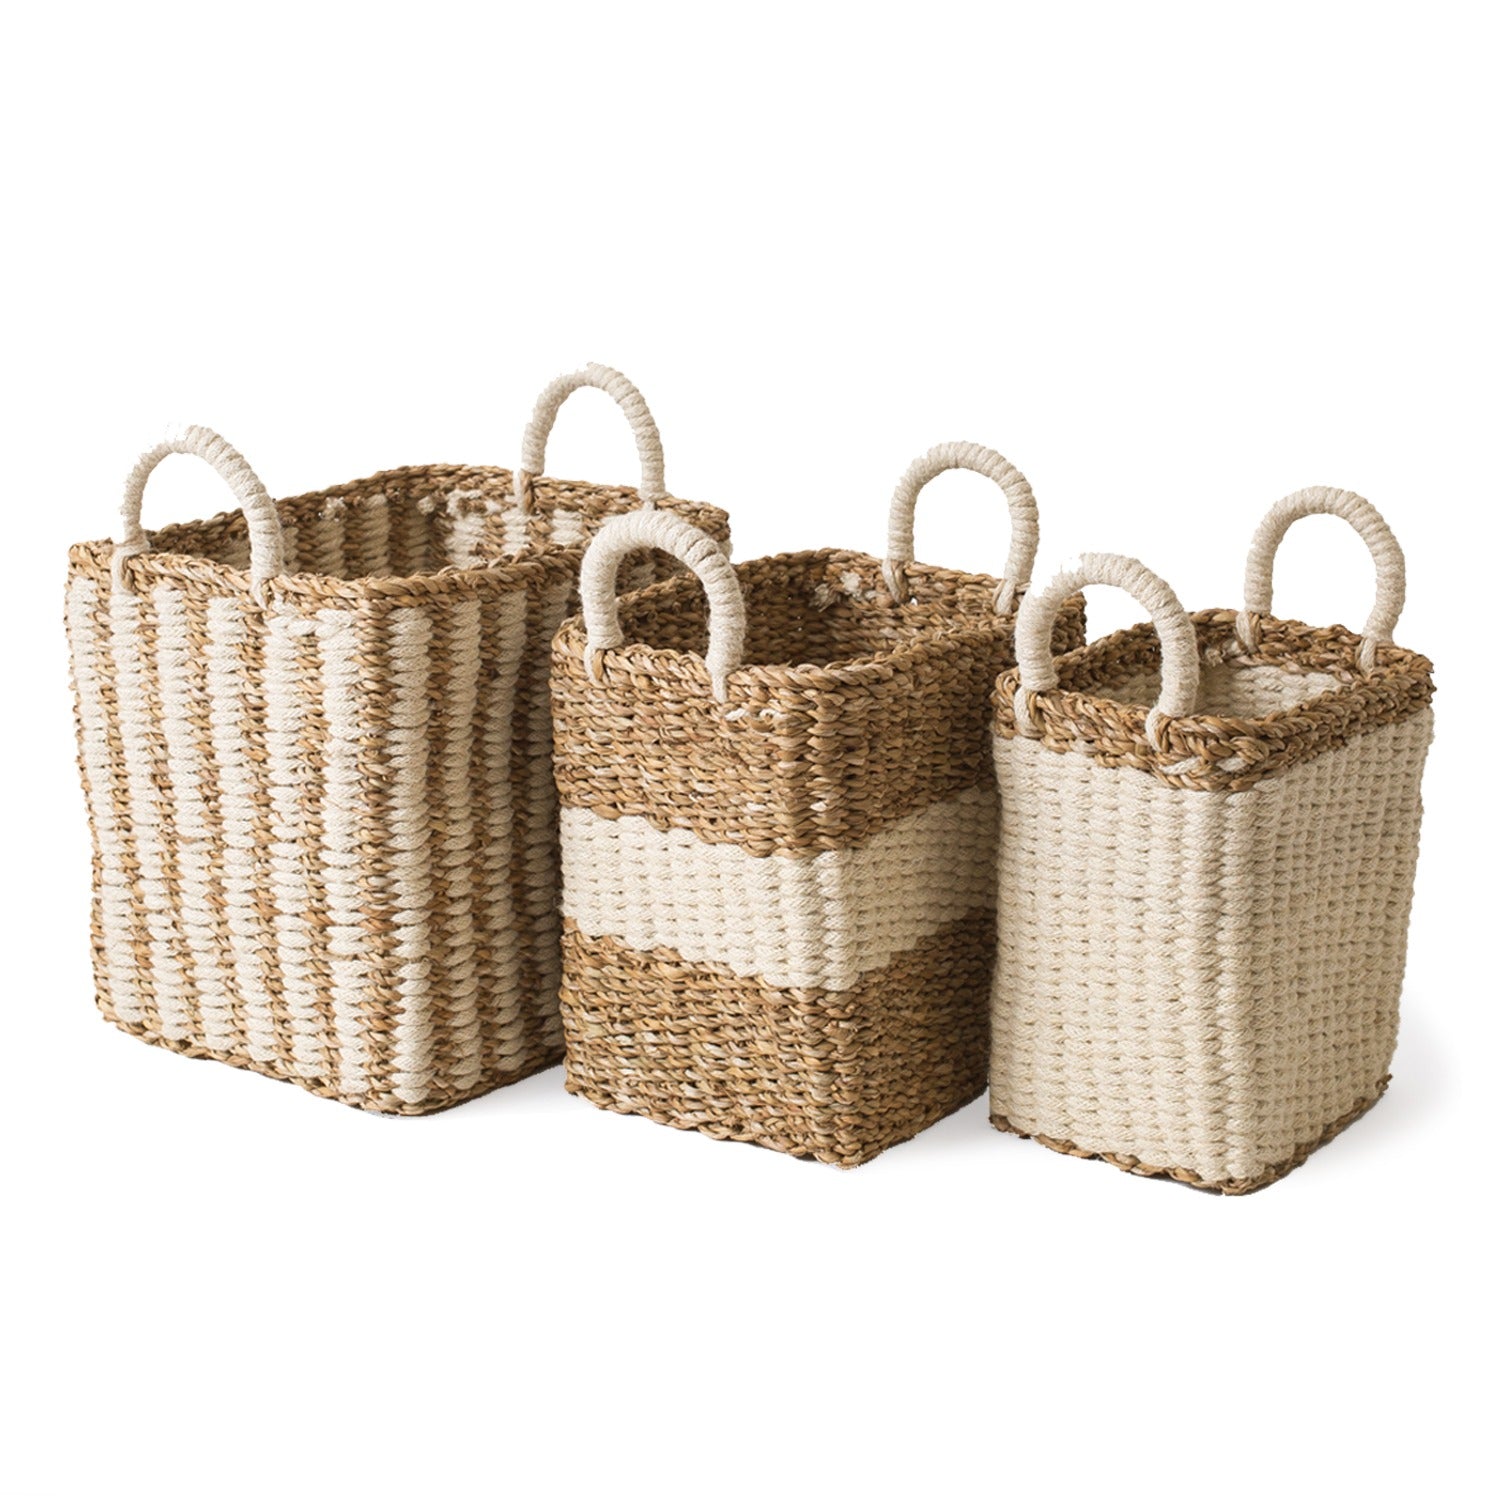 Baskets | Home Décor & Storage